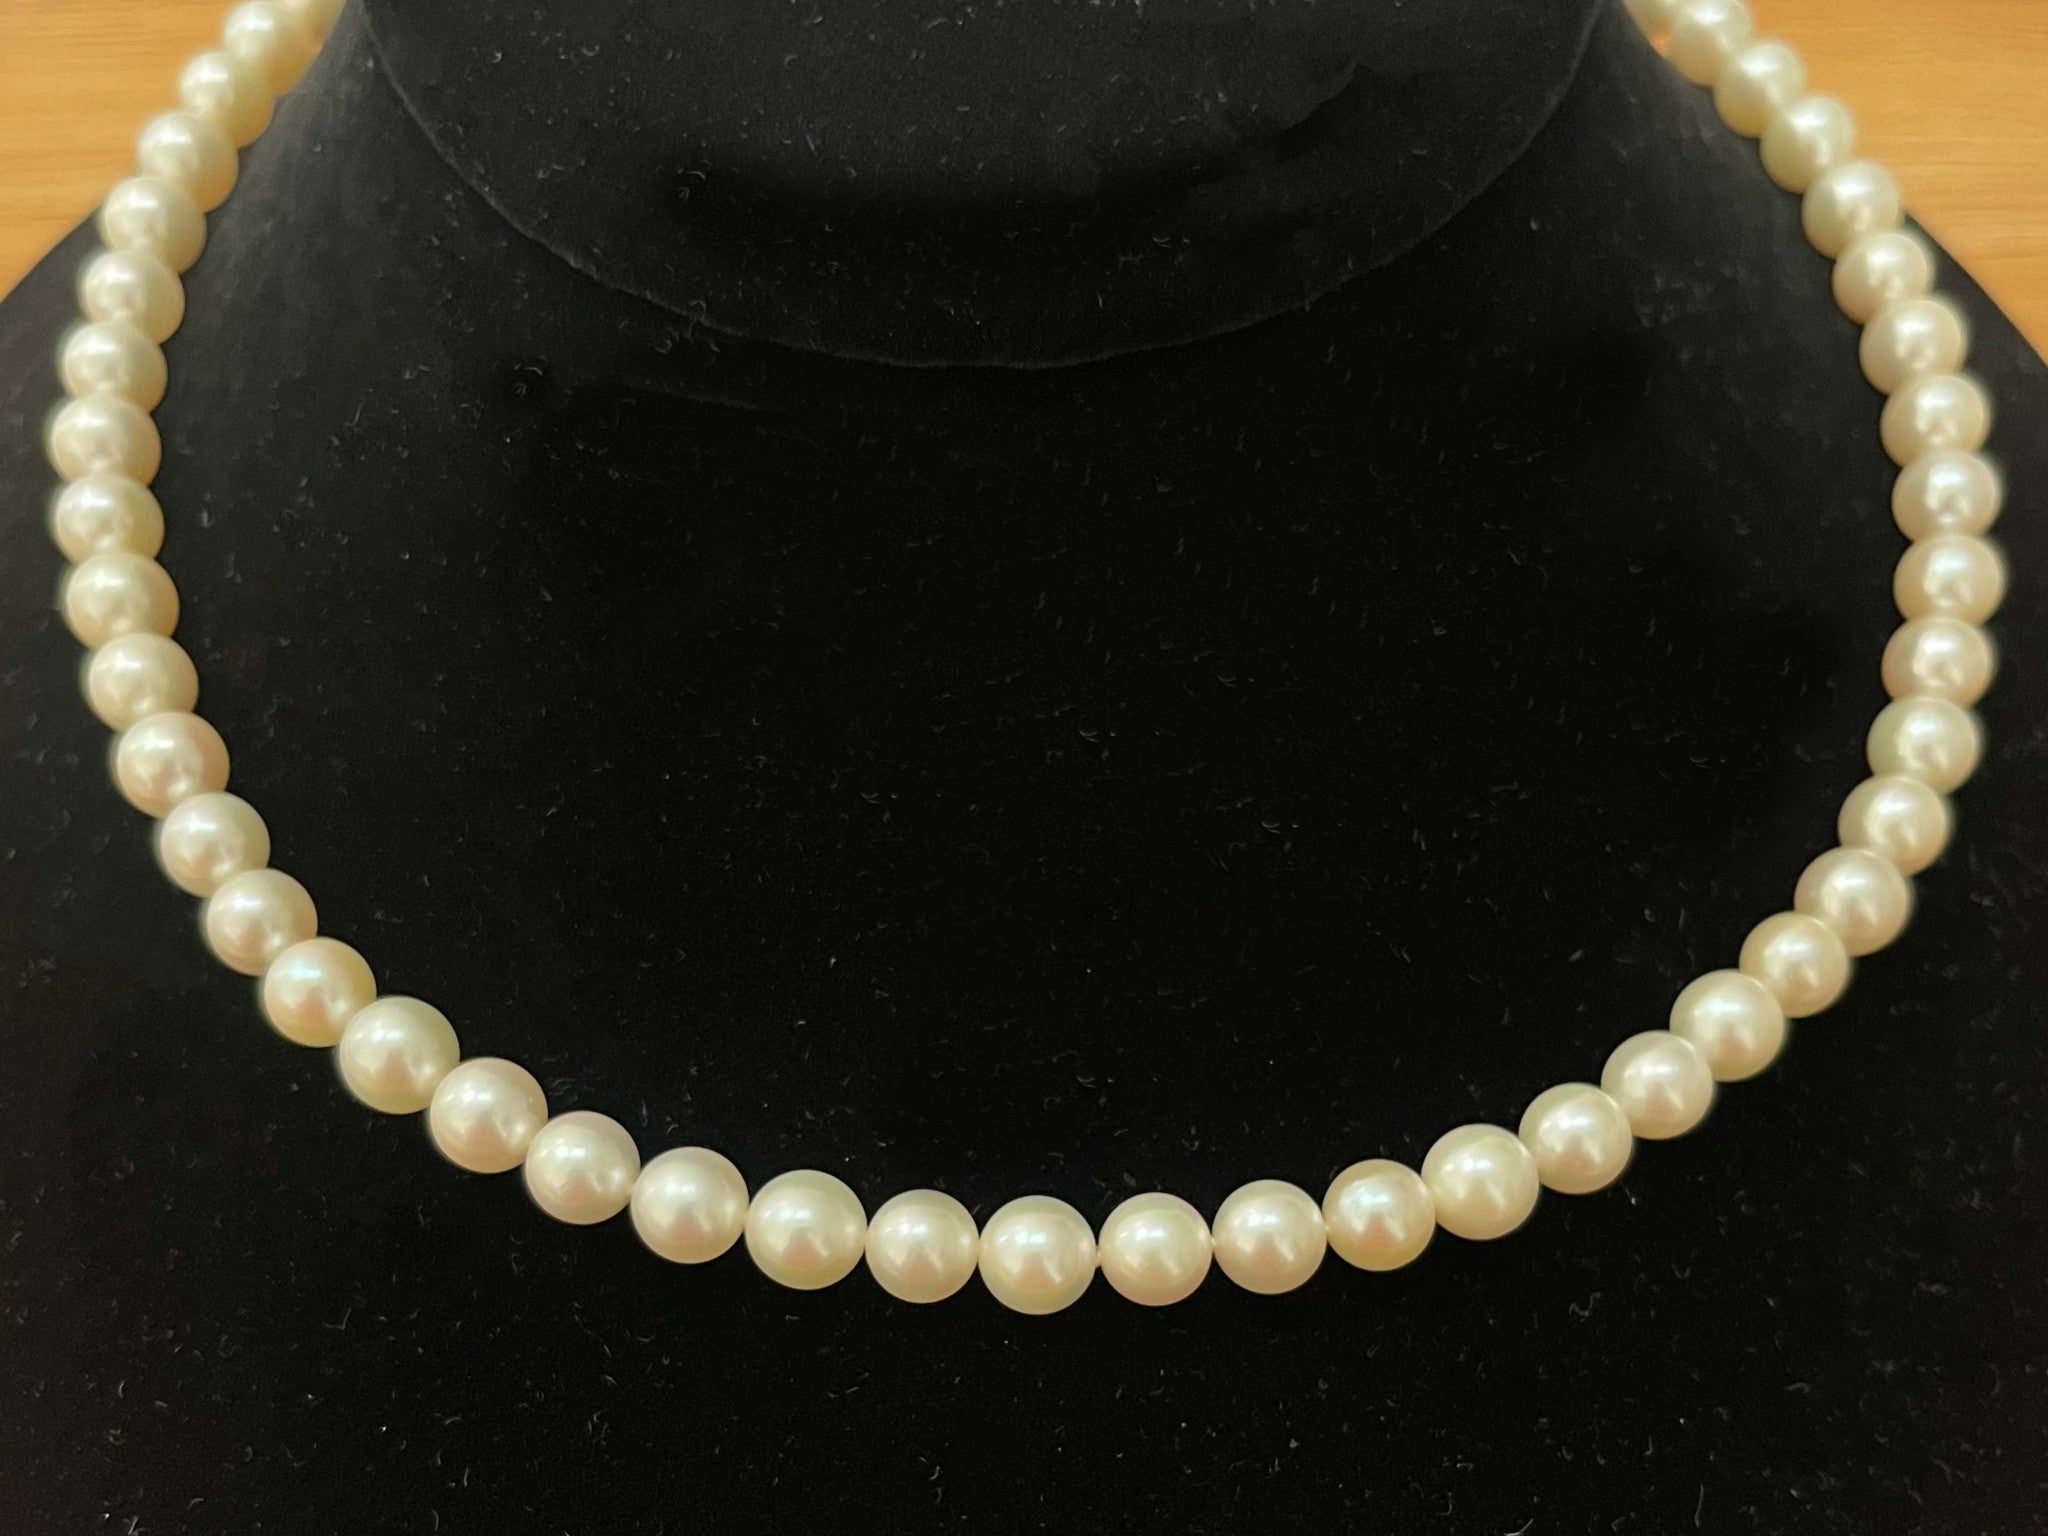 Mikimoto Akoya Cultured Pearl Strand Necklace 18K